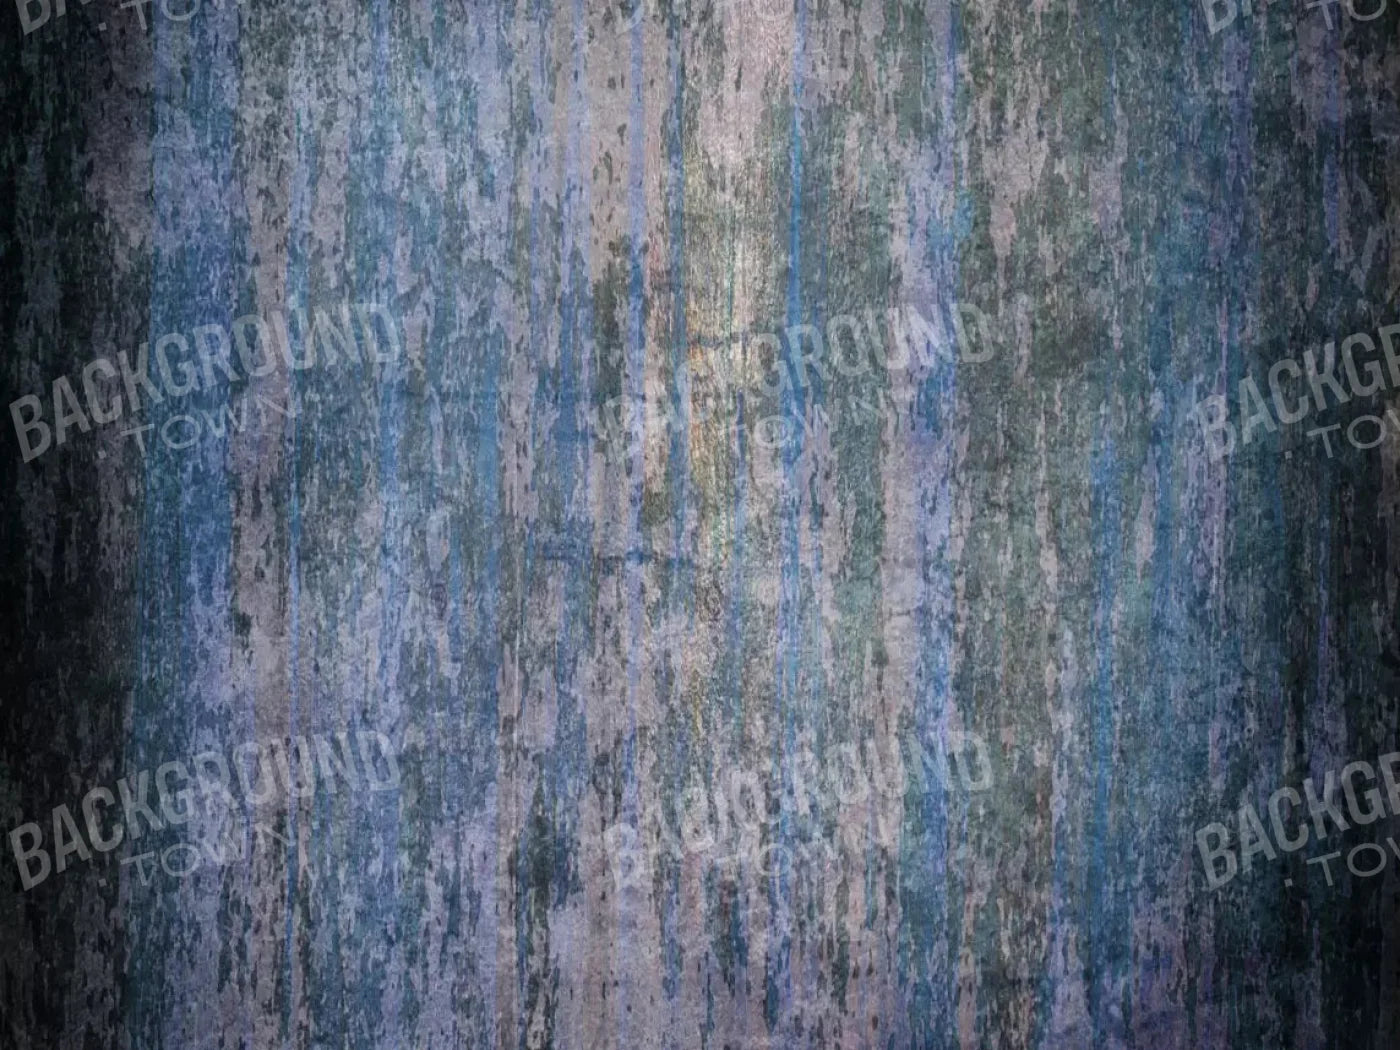 Blueblood 7X5 Ultracloth ( 84 X 60 Inch ) Backdrop